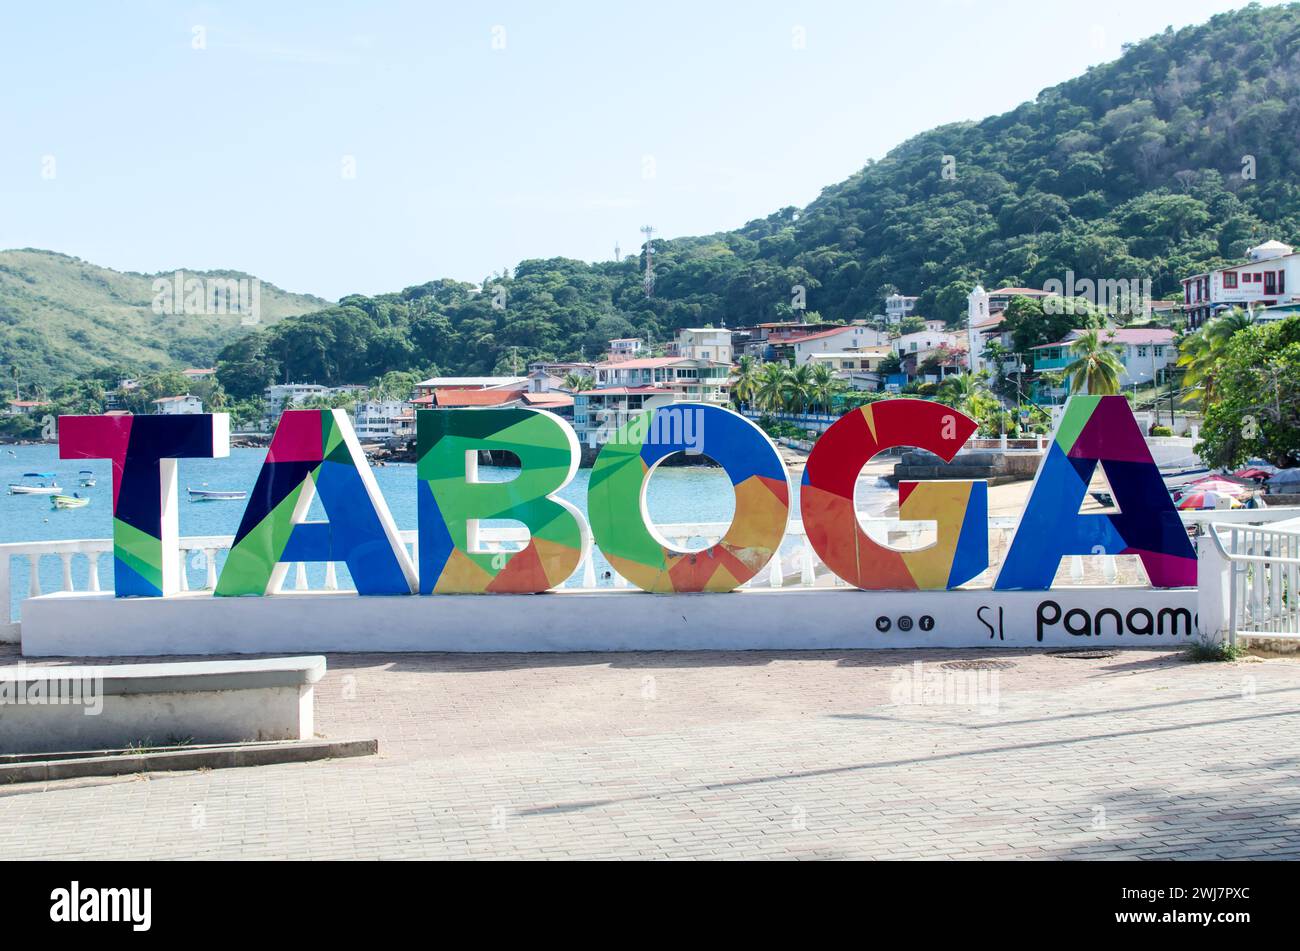 Welcome sign to Taboga Island in Panama Bay Stock Photo